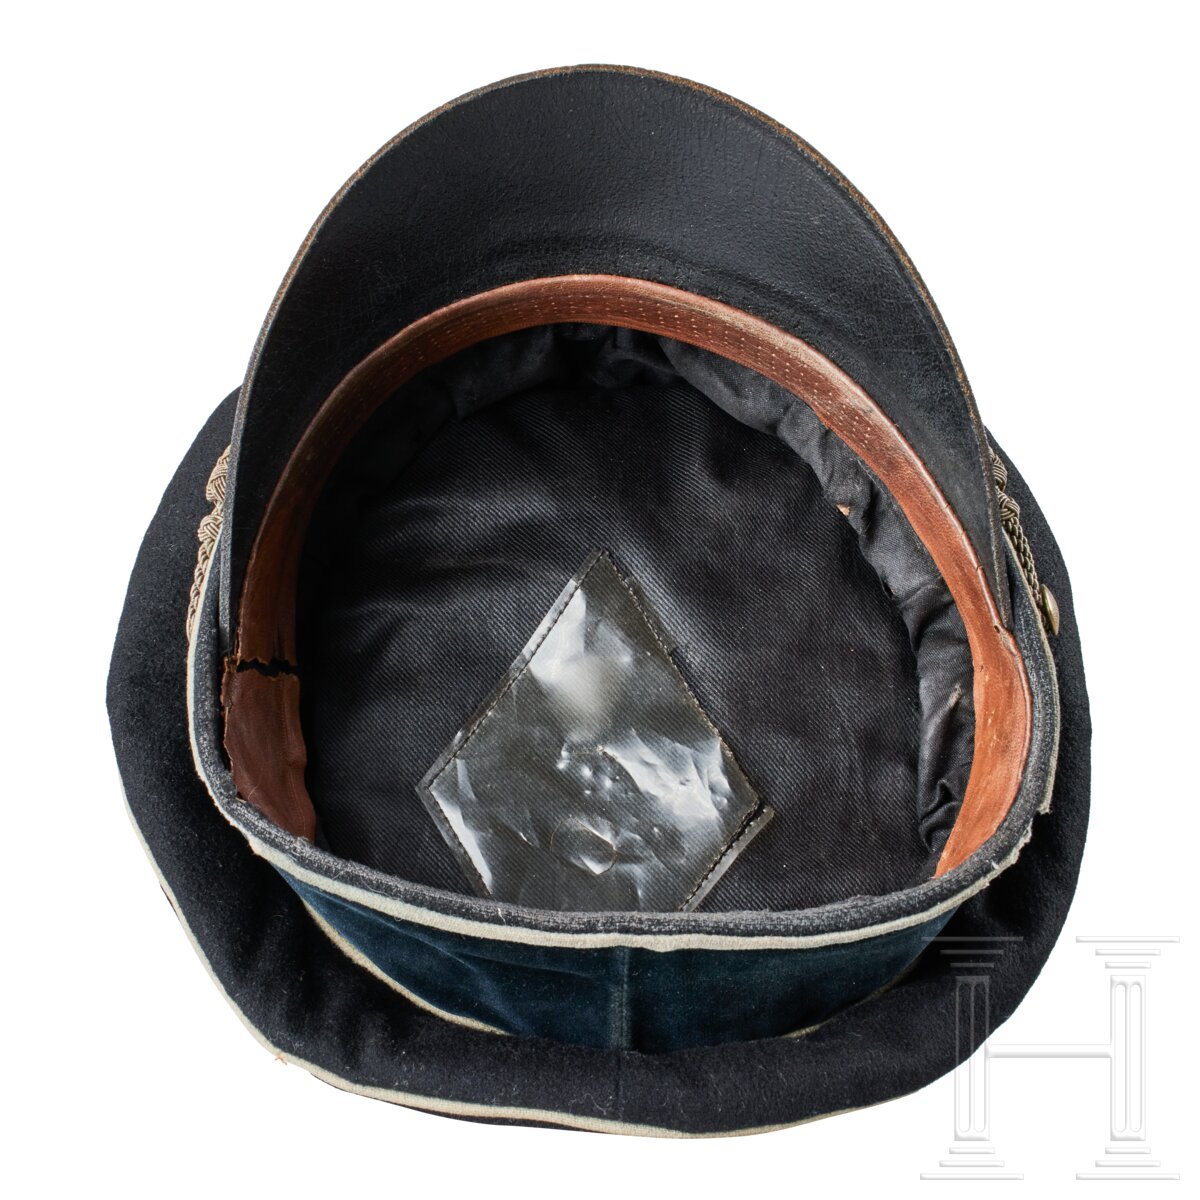 A Visor Cap for Allgemeine SS Officer - Image 8 of 10